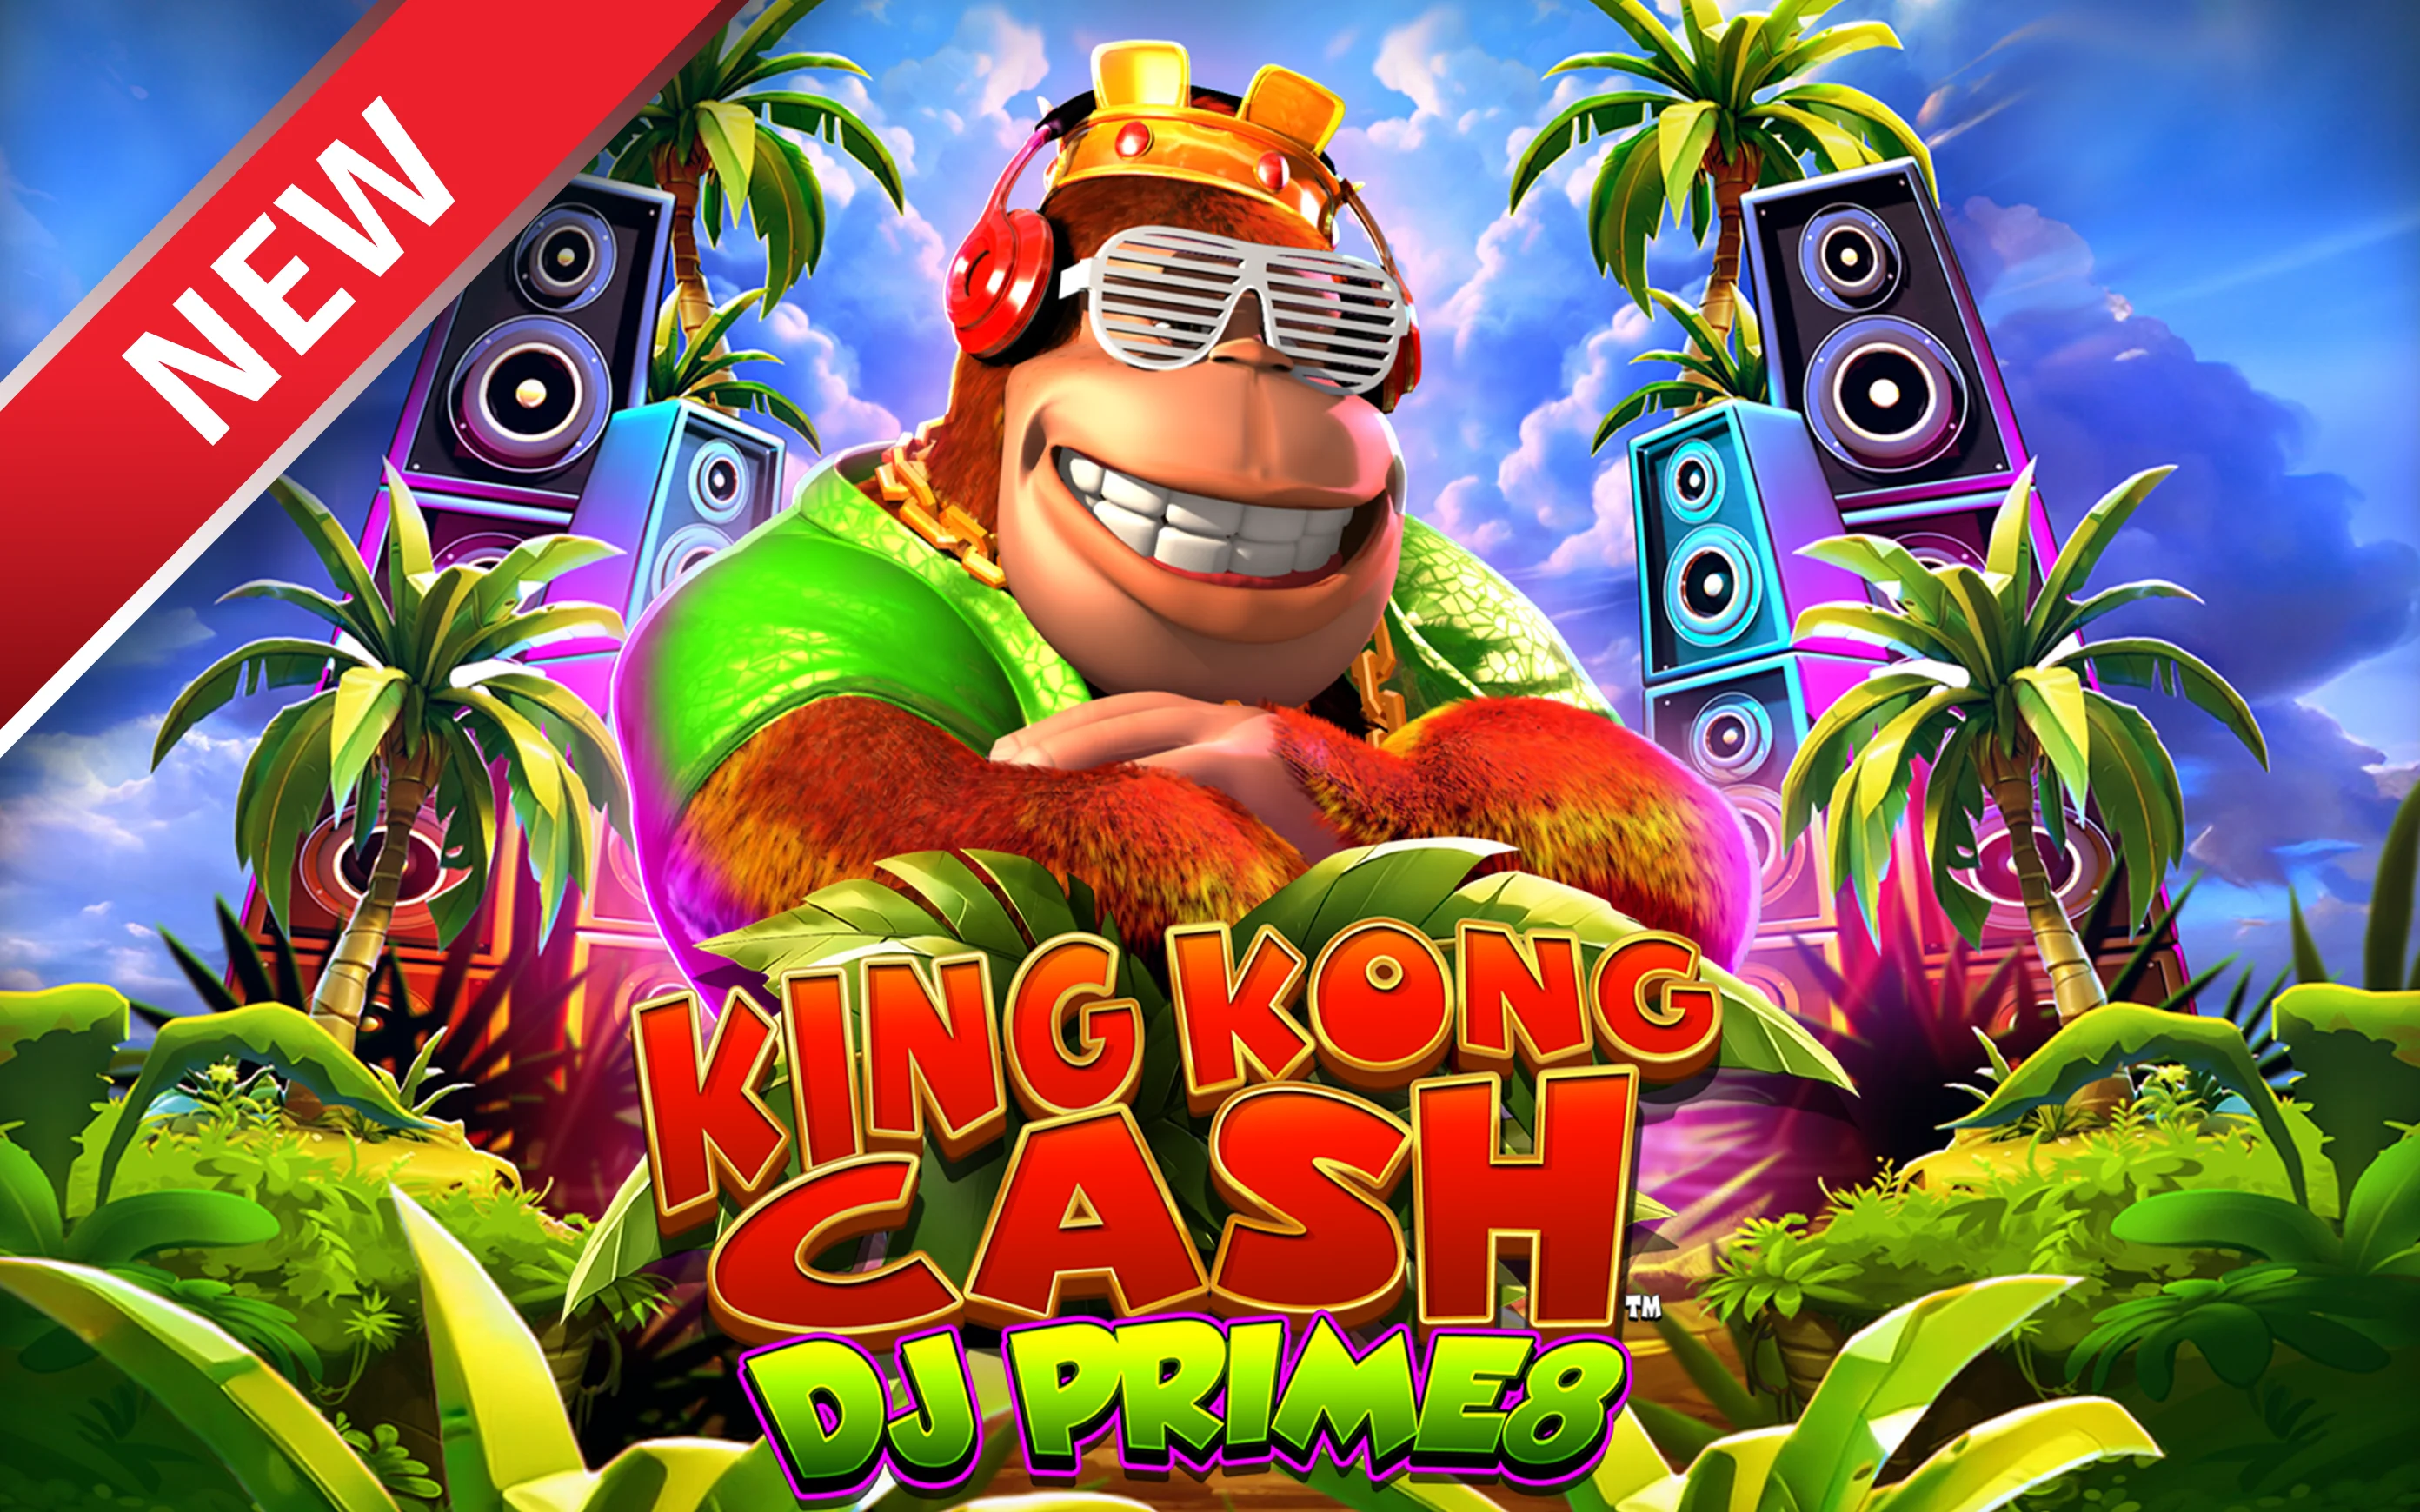 Играйте в King Kong Cash DJ Prime8 в онлайн-казино Starcasino.be